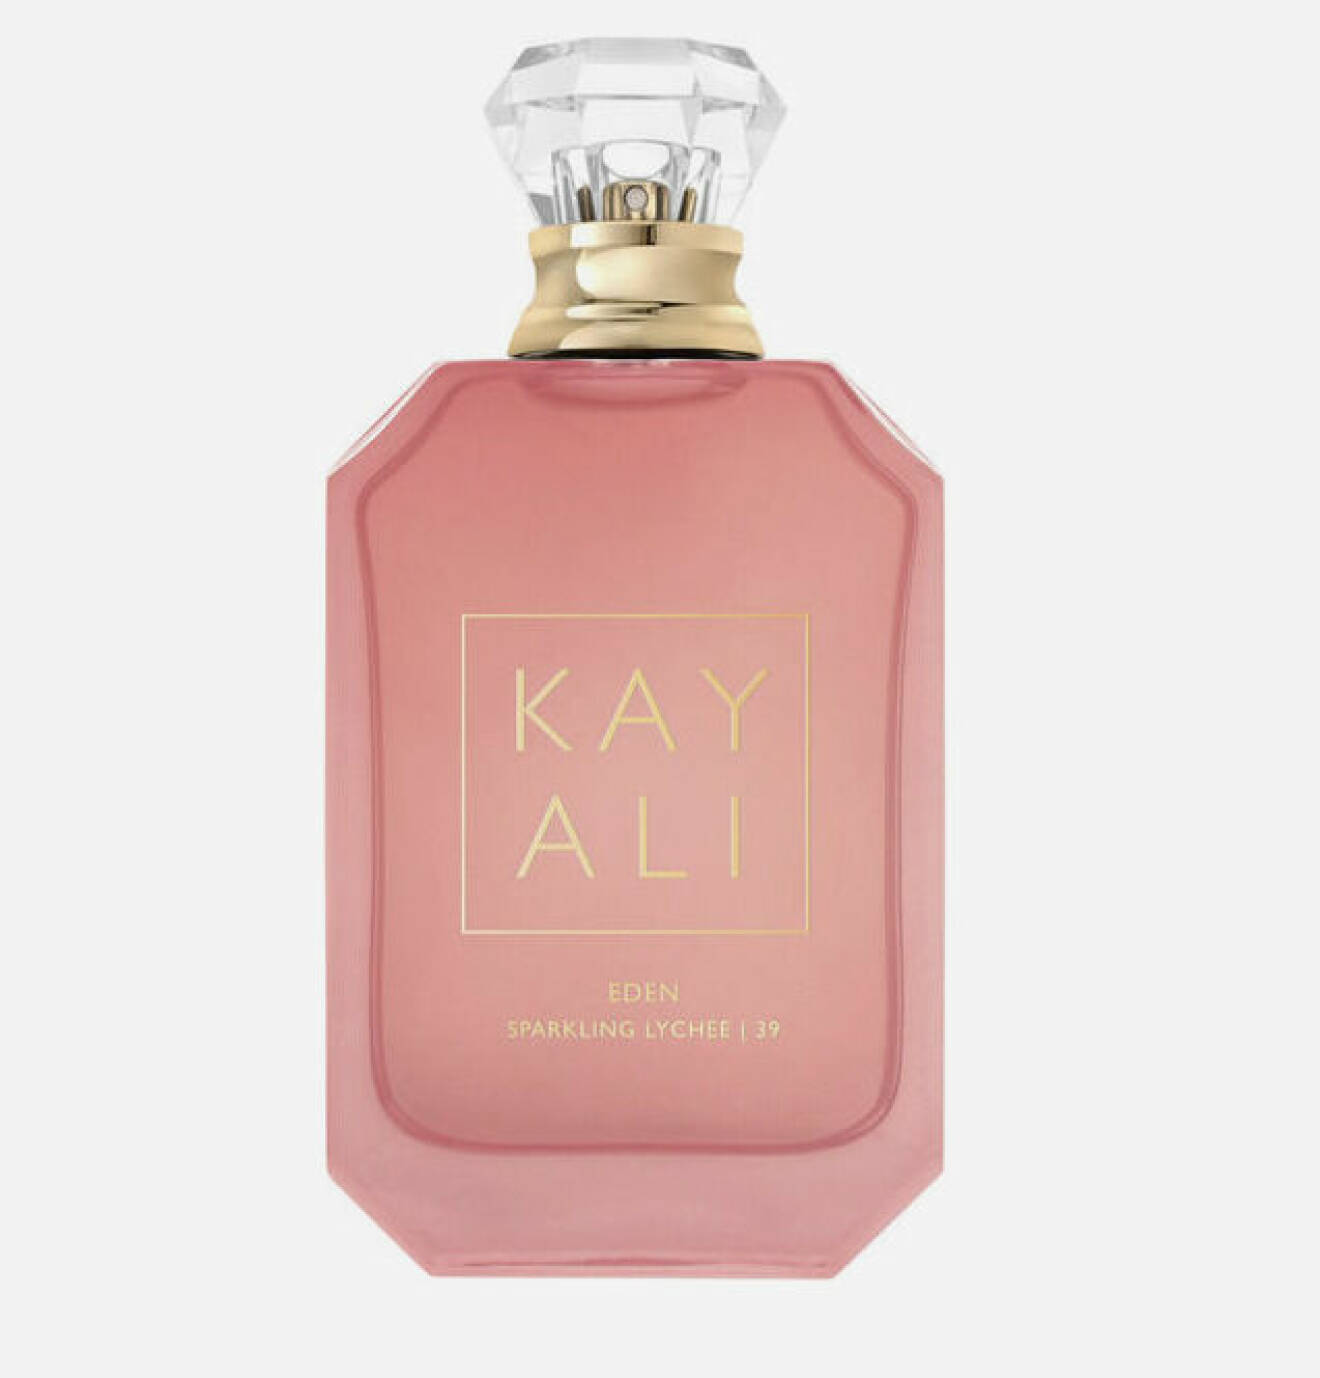 Kayali lychee parfym